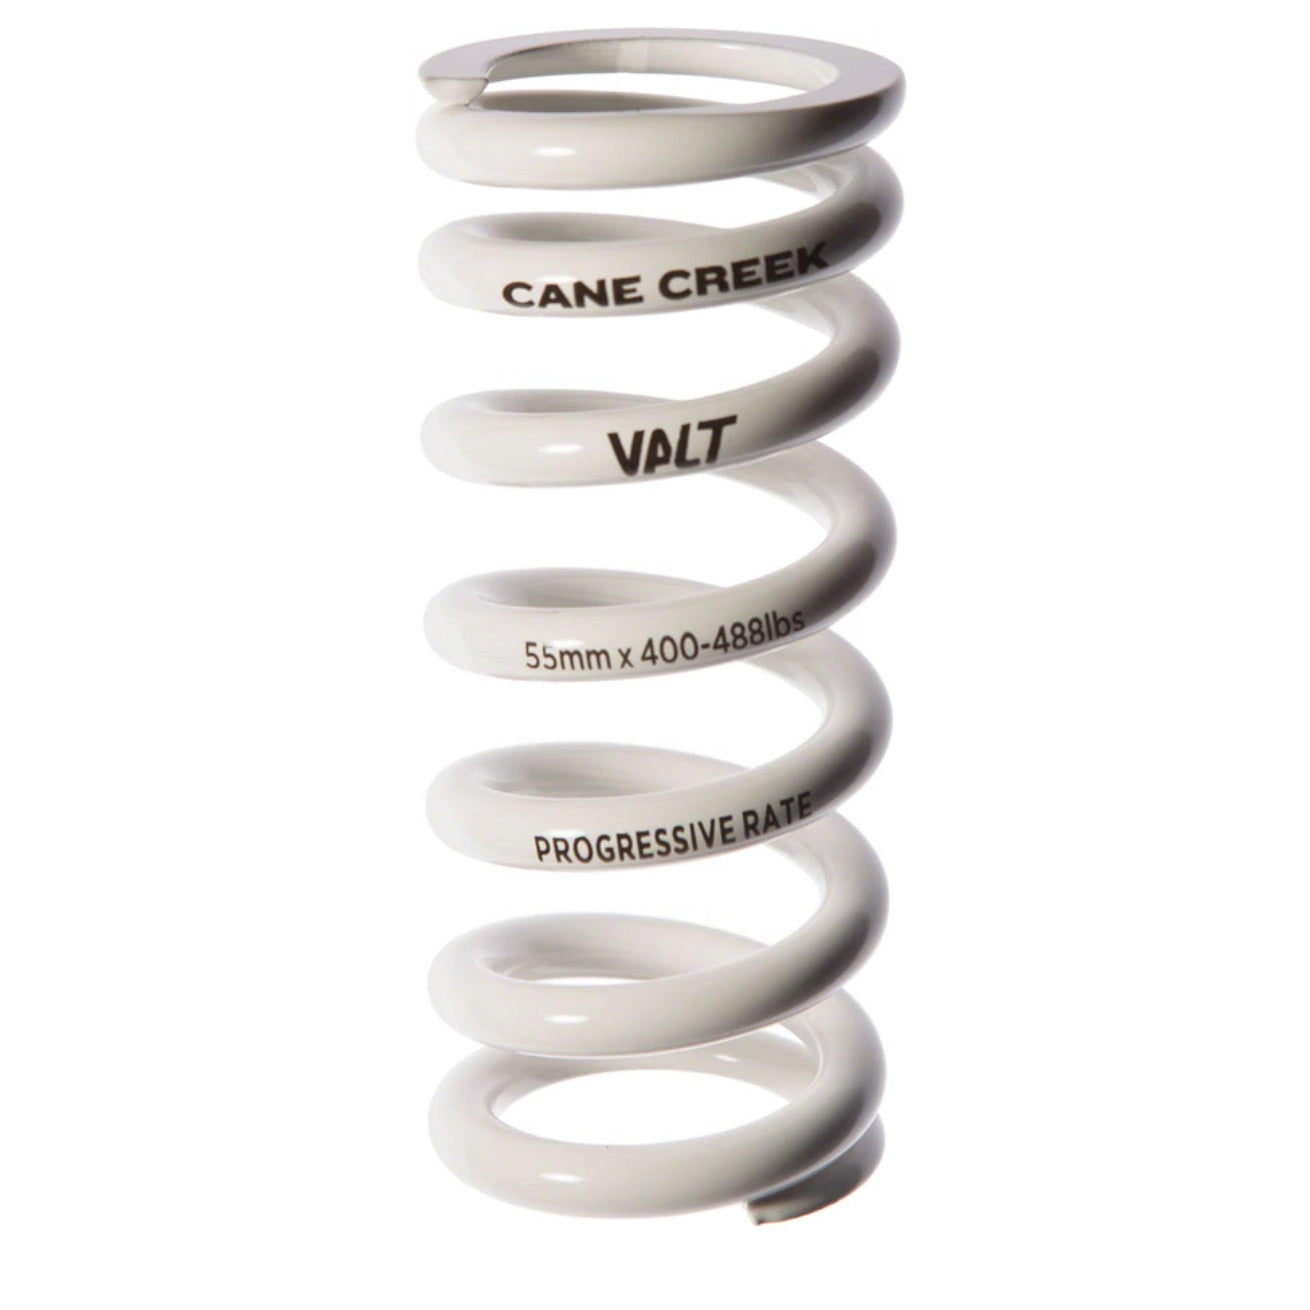 Cane Creek Progressive Rate VALT Lightweight Rear Shock Spring - 65mm x 400-488lbs White